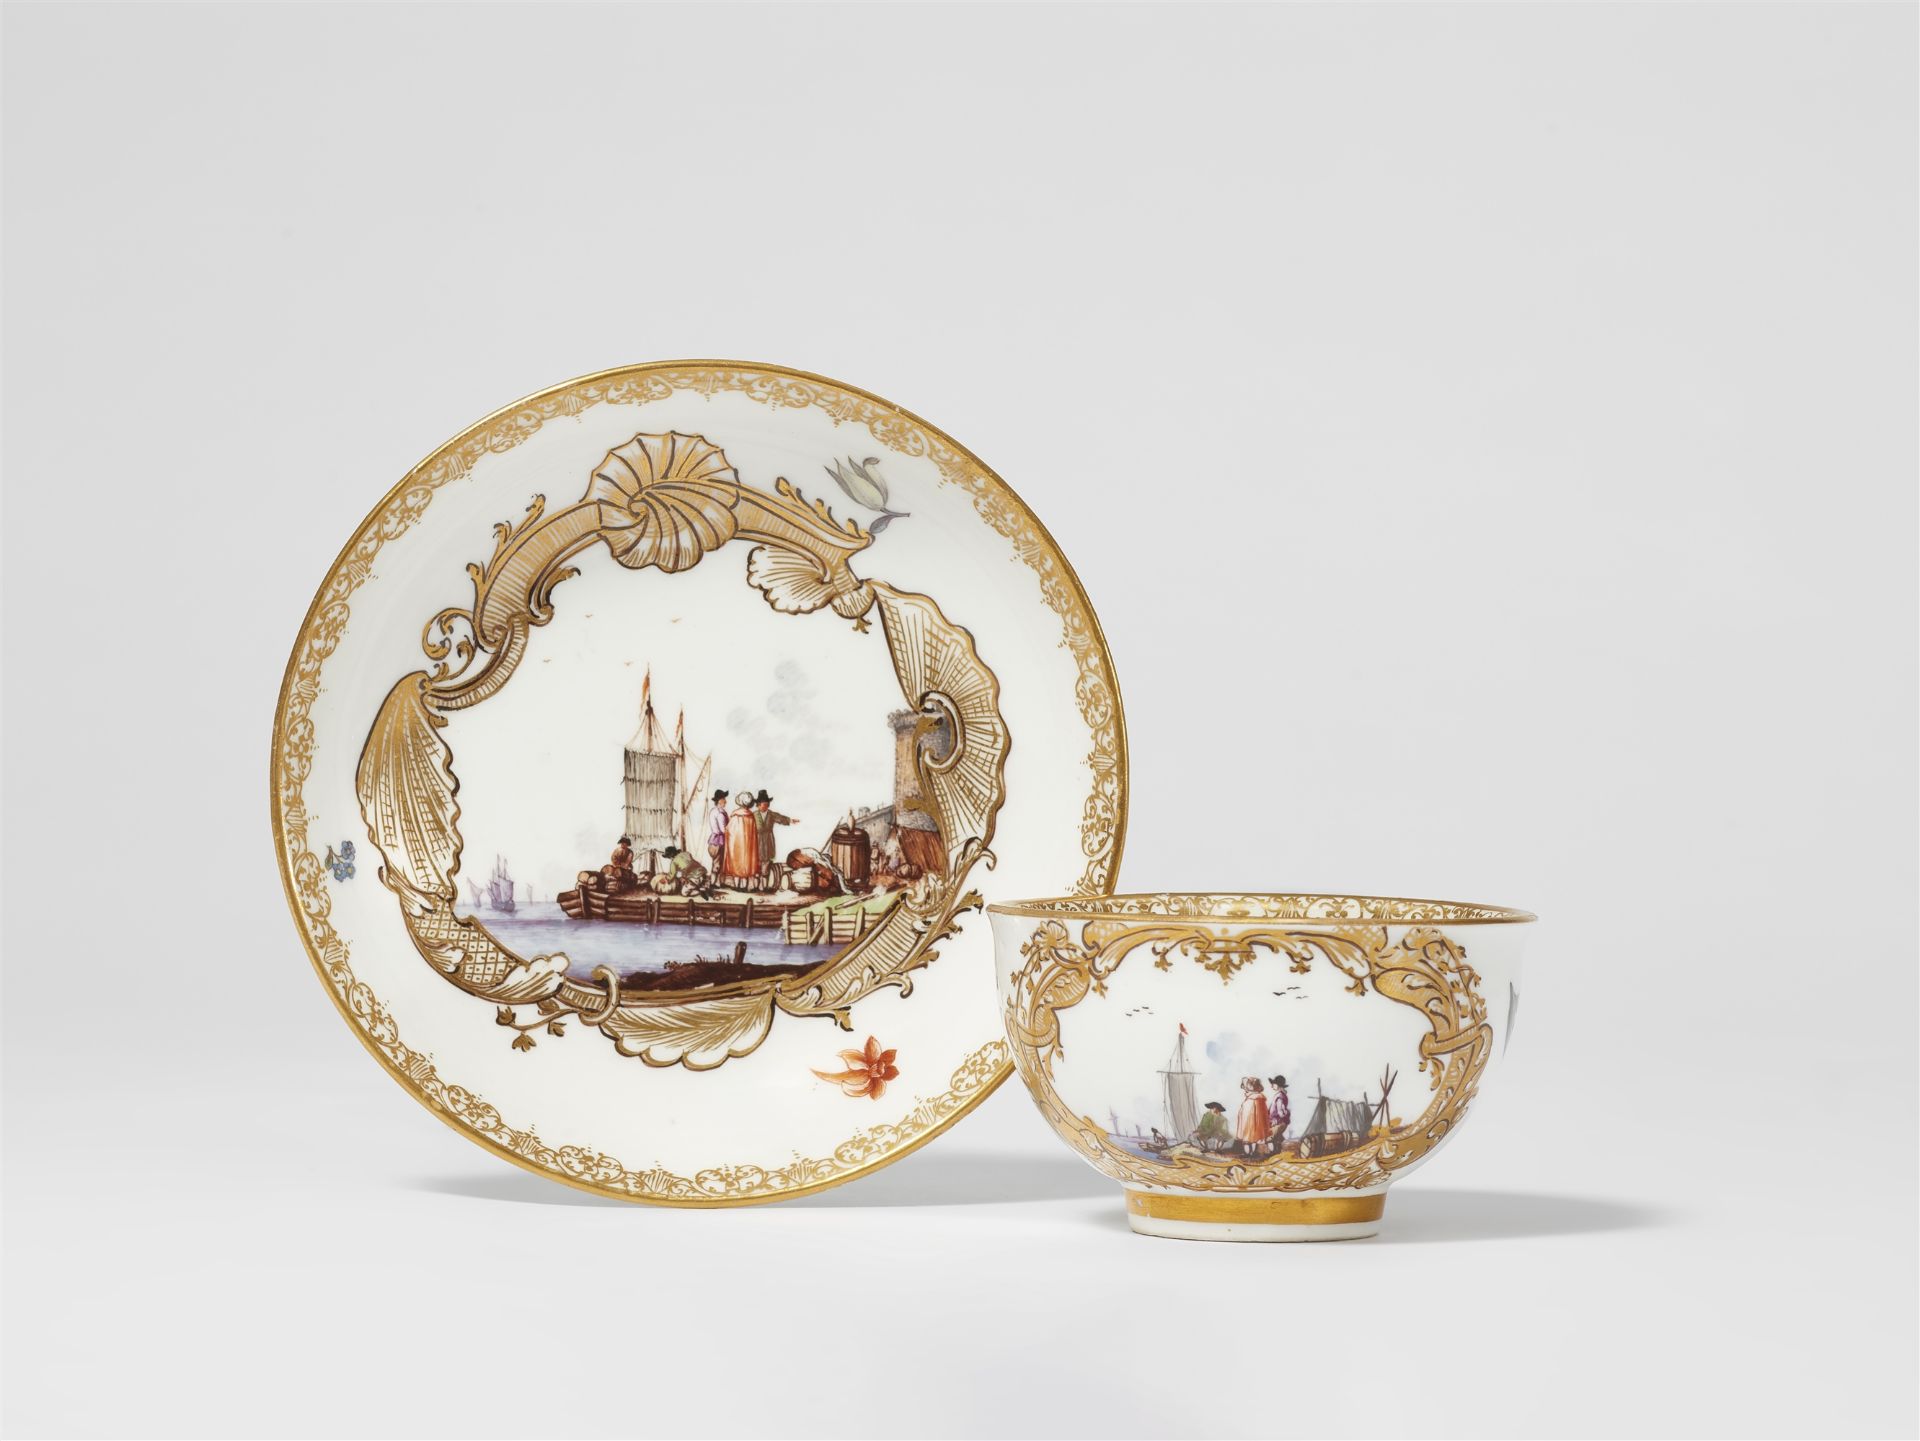 A Meissen porcelain tea bowl and saucer with merchant navy scenes